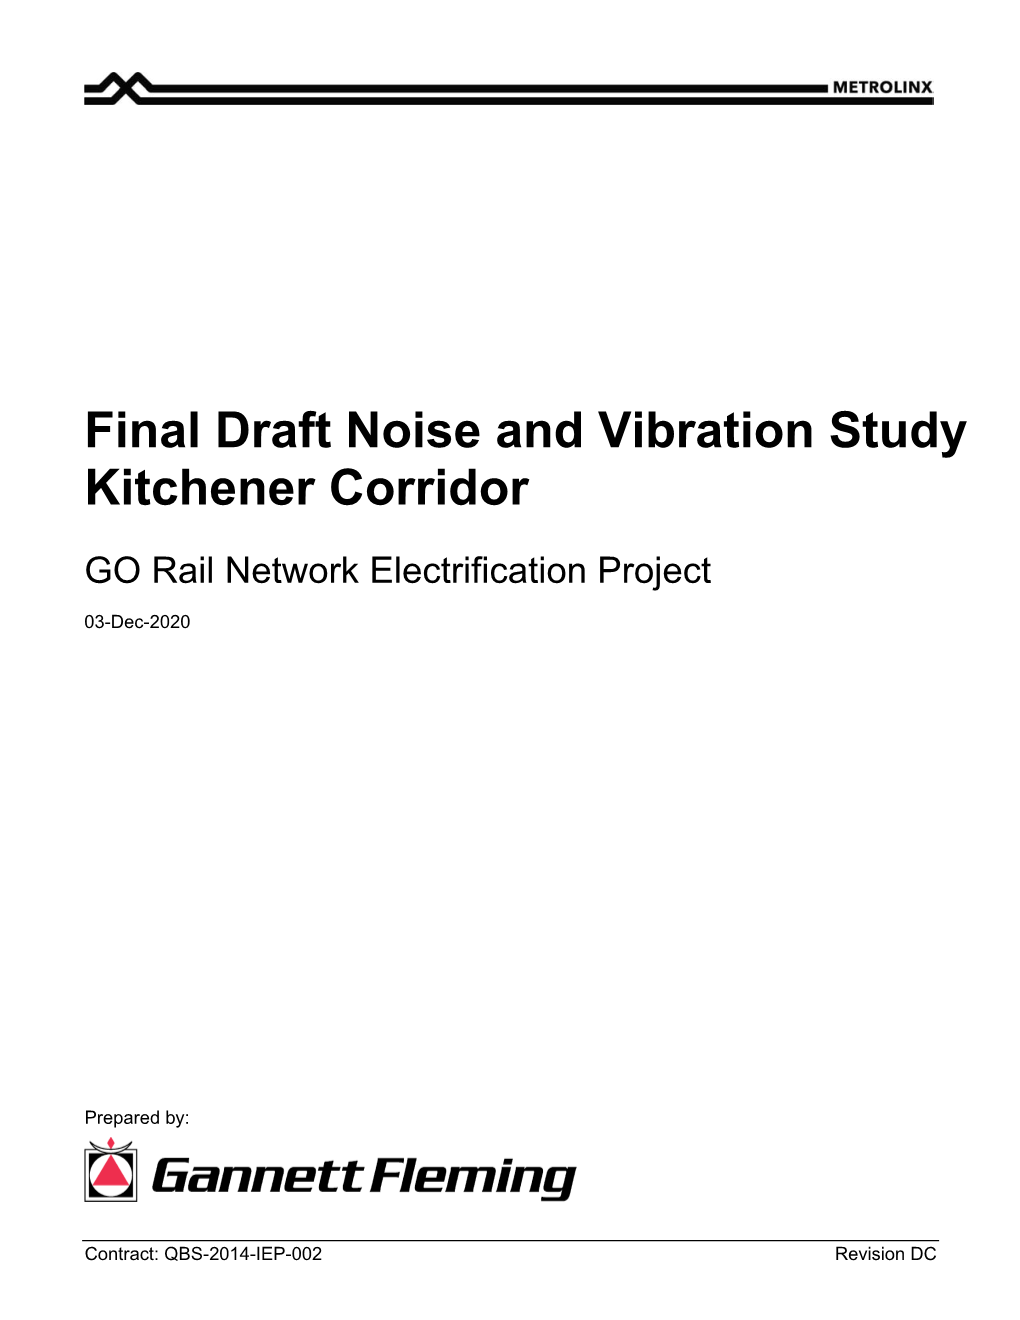 Final Draft Noise and Vibration Study Kitchener Corridor